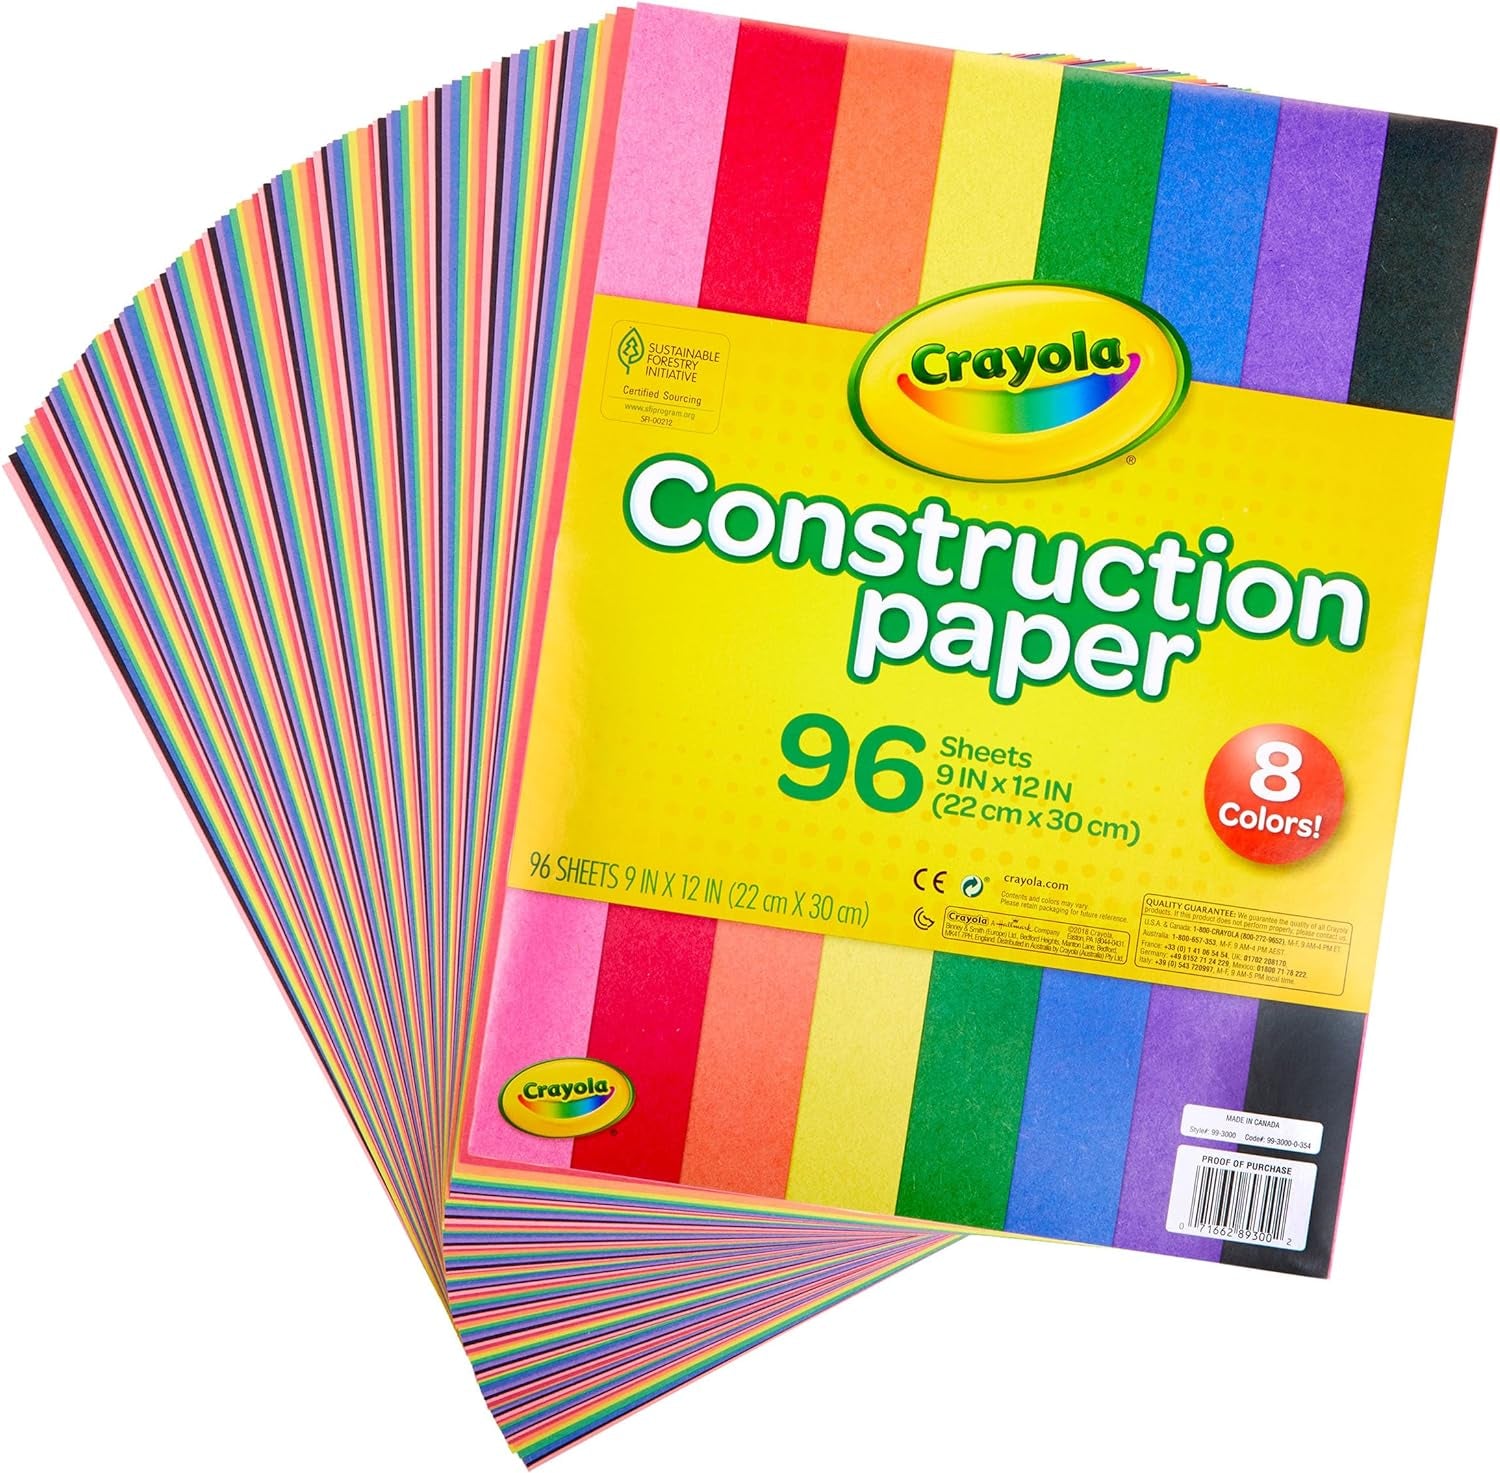 Construction Paper 96 Sheets